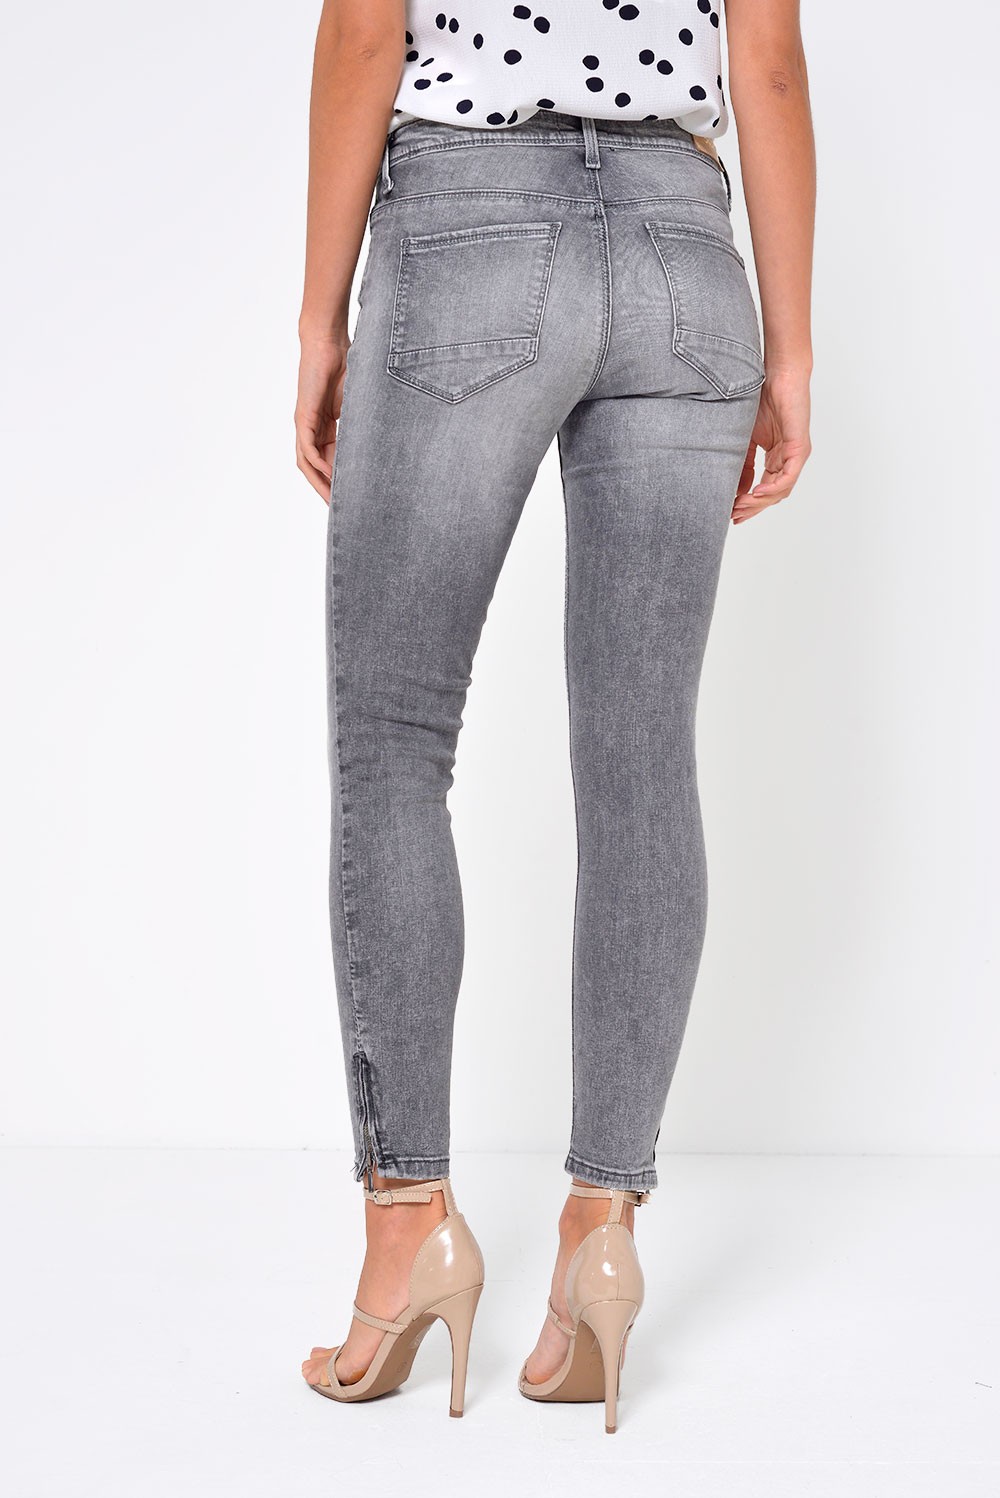 Only Kendell Regular Ankle Zip Jeans in Medium Grey | iCLOTHING